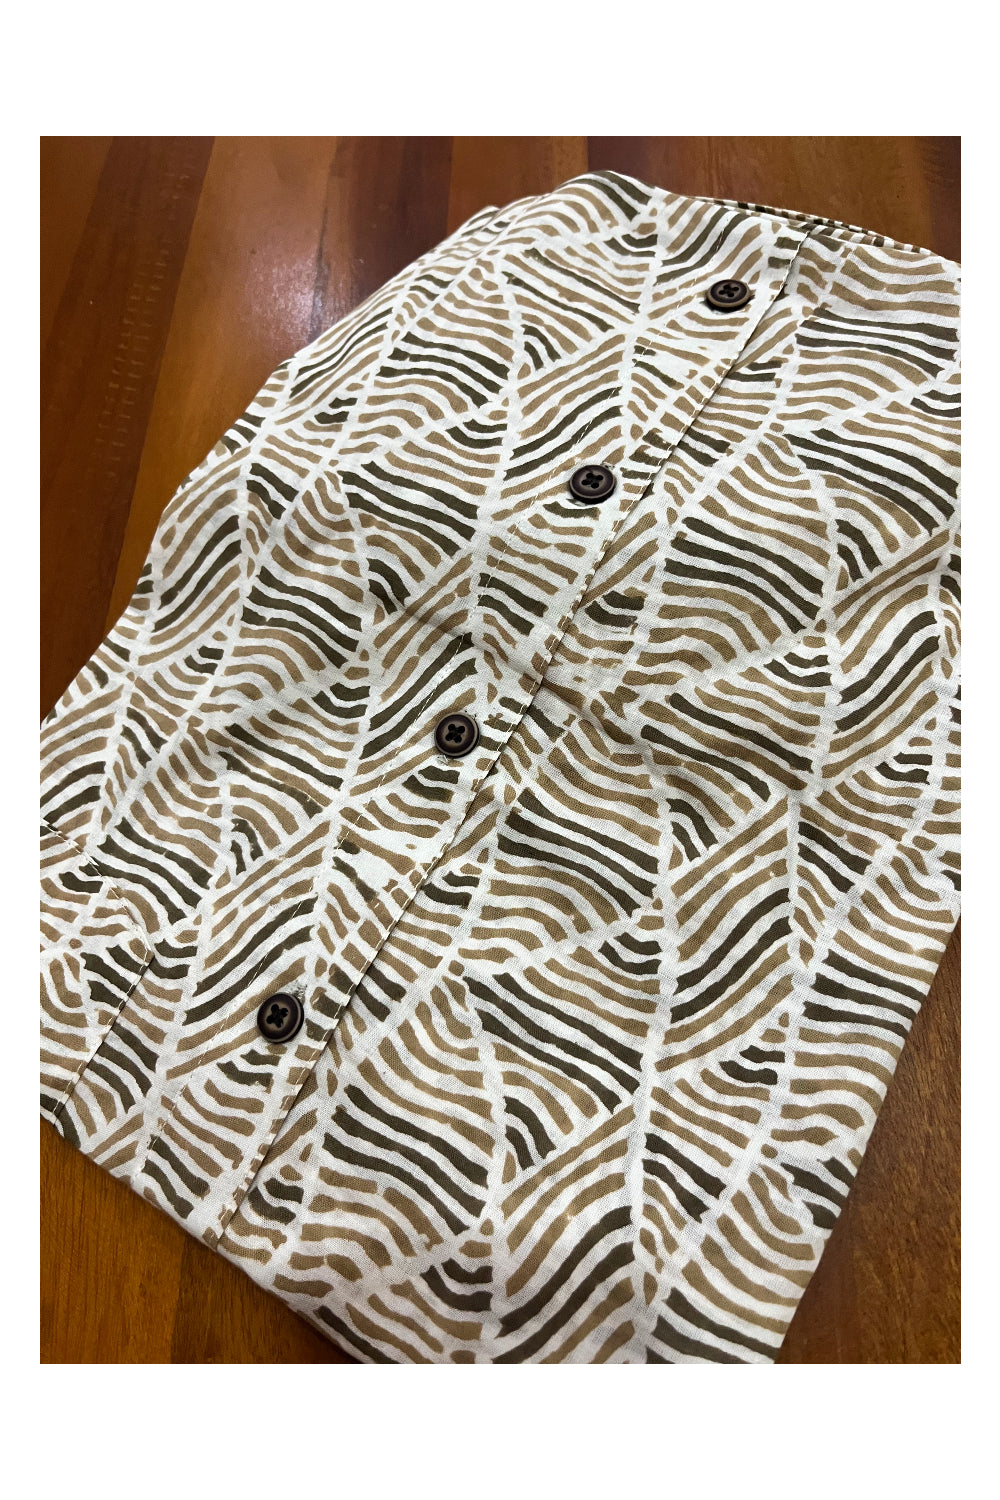 Southloom Jaipur Cotton Light Brown Hand Block Printed Shirt (Full Sleeves)